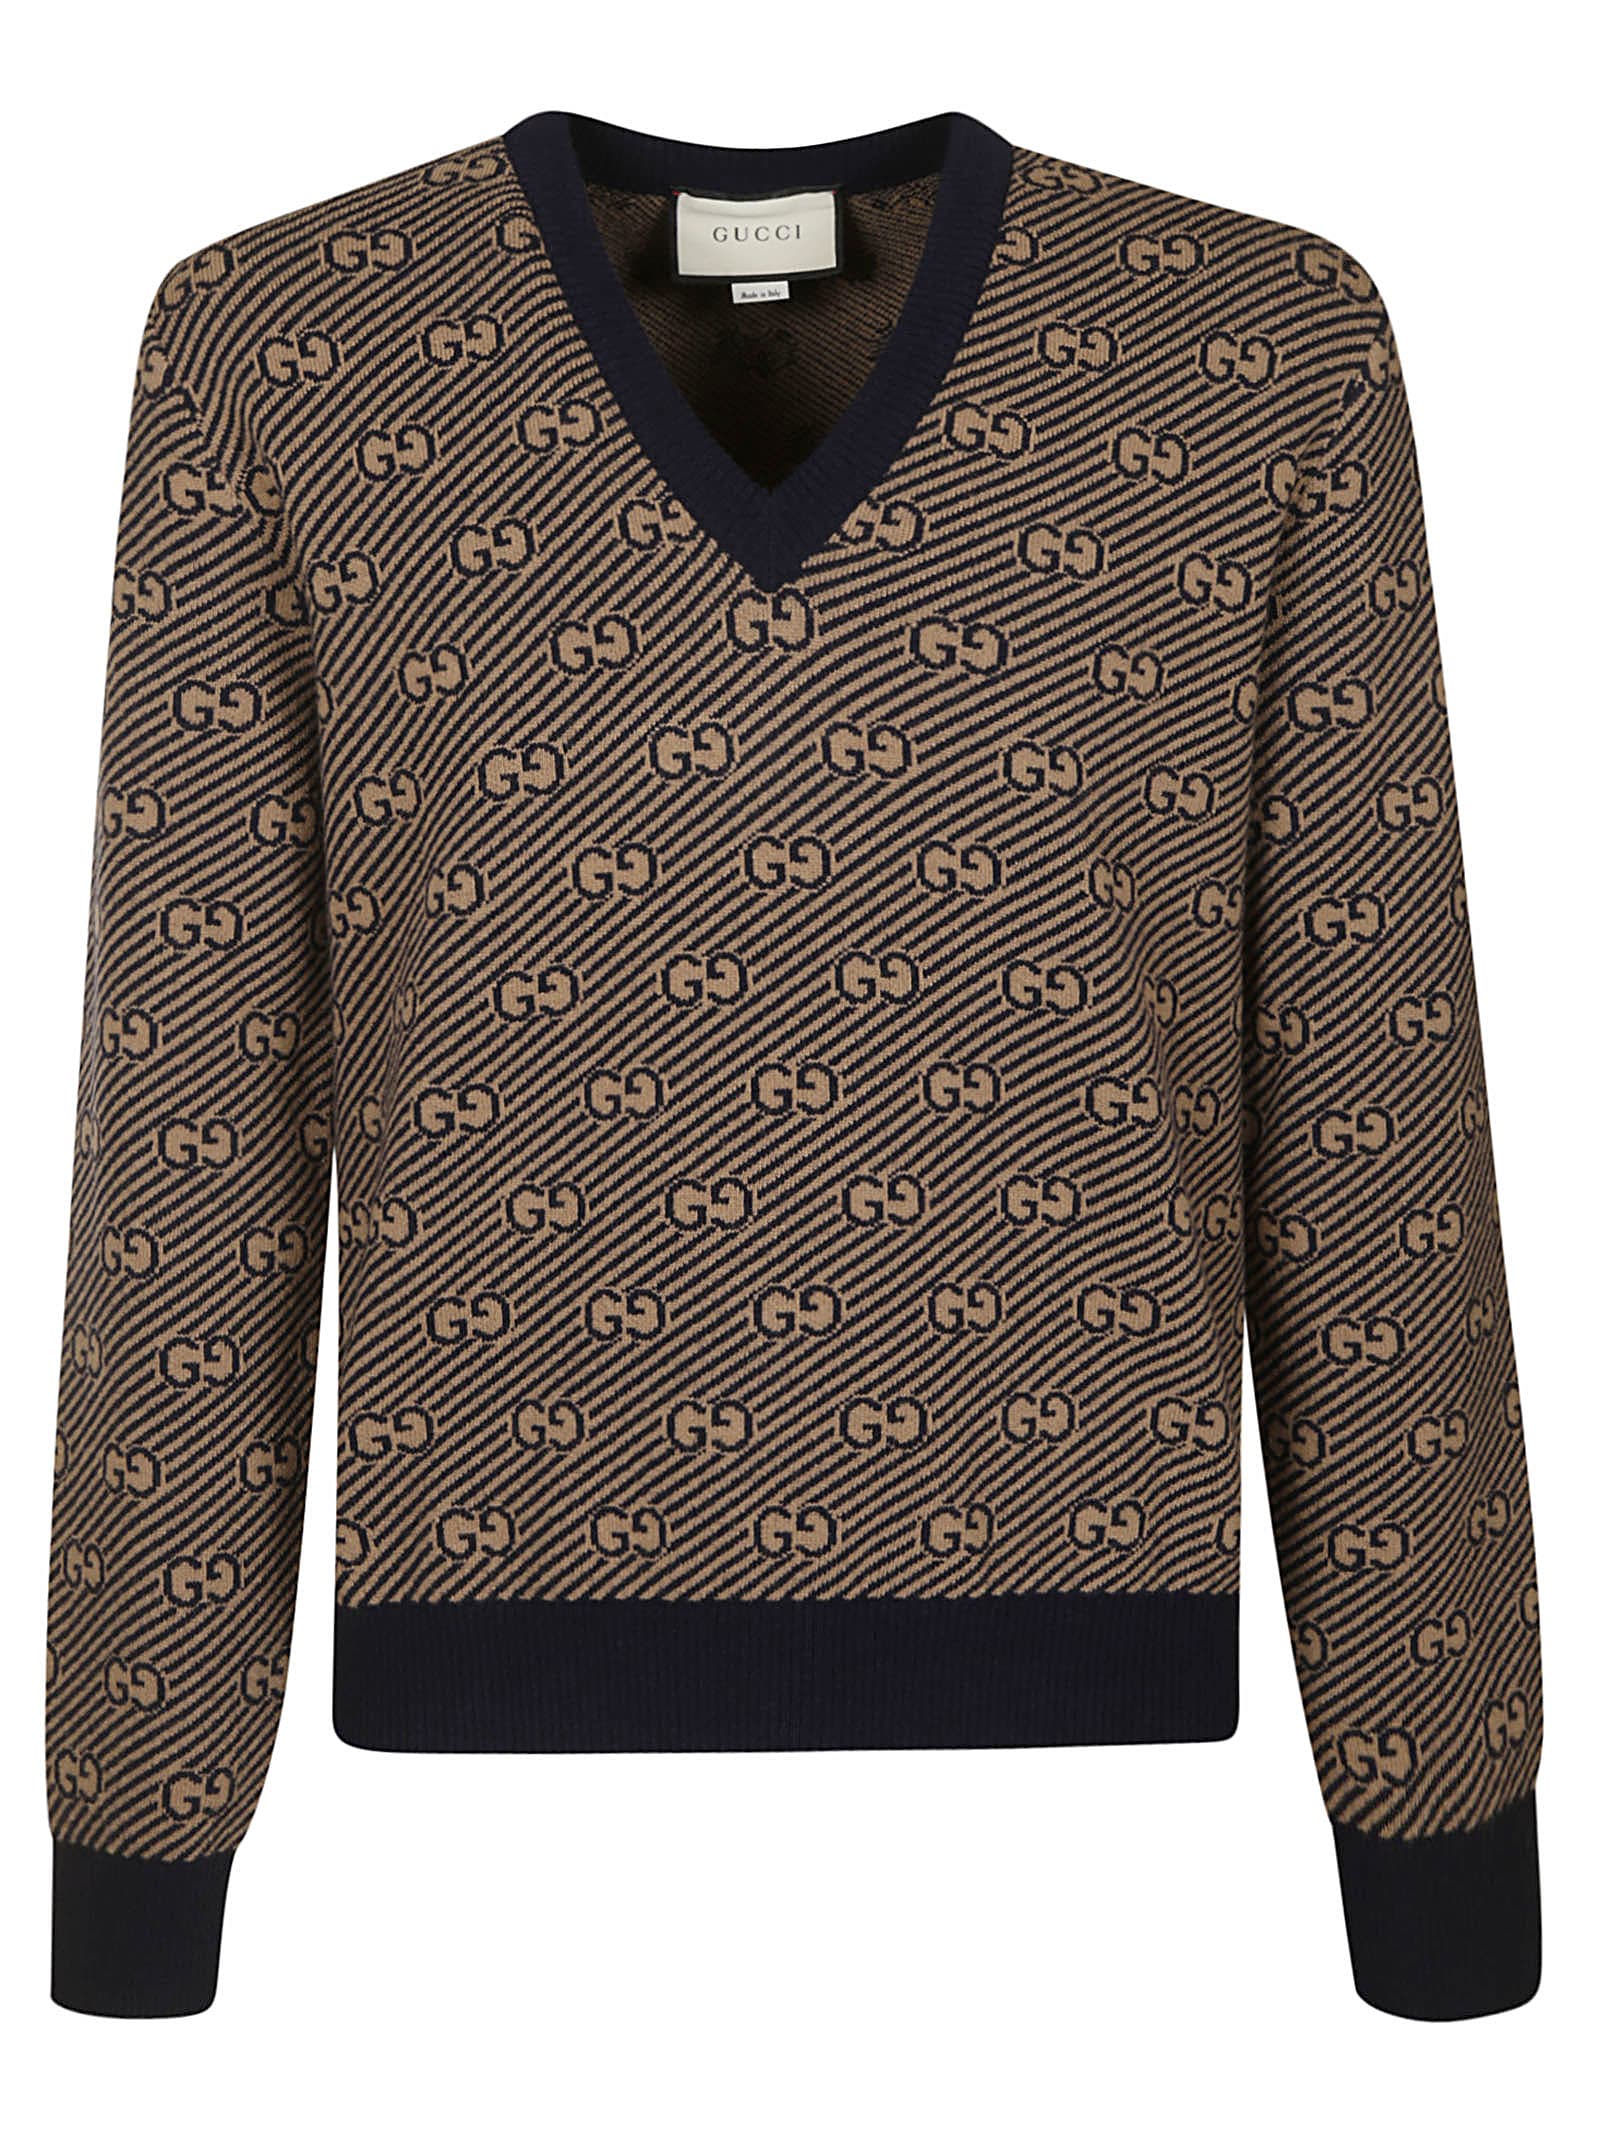 Gucci Sweaters Iicf Always Like A Sale